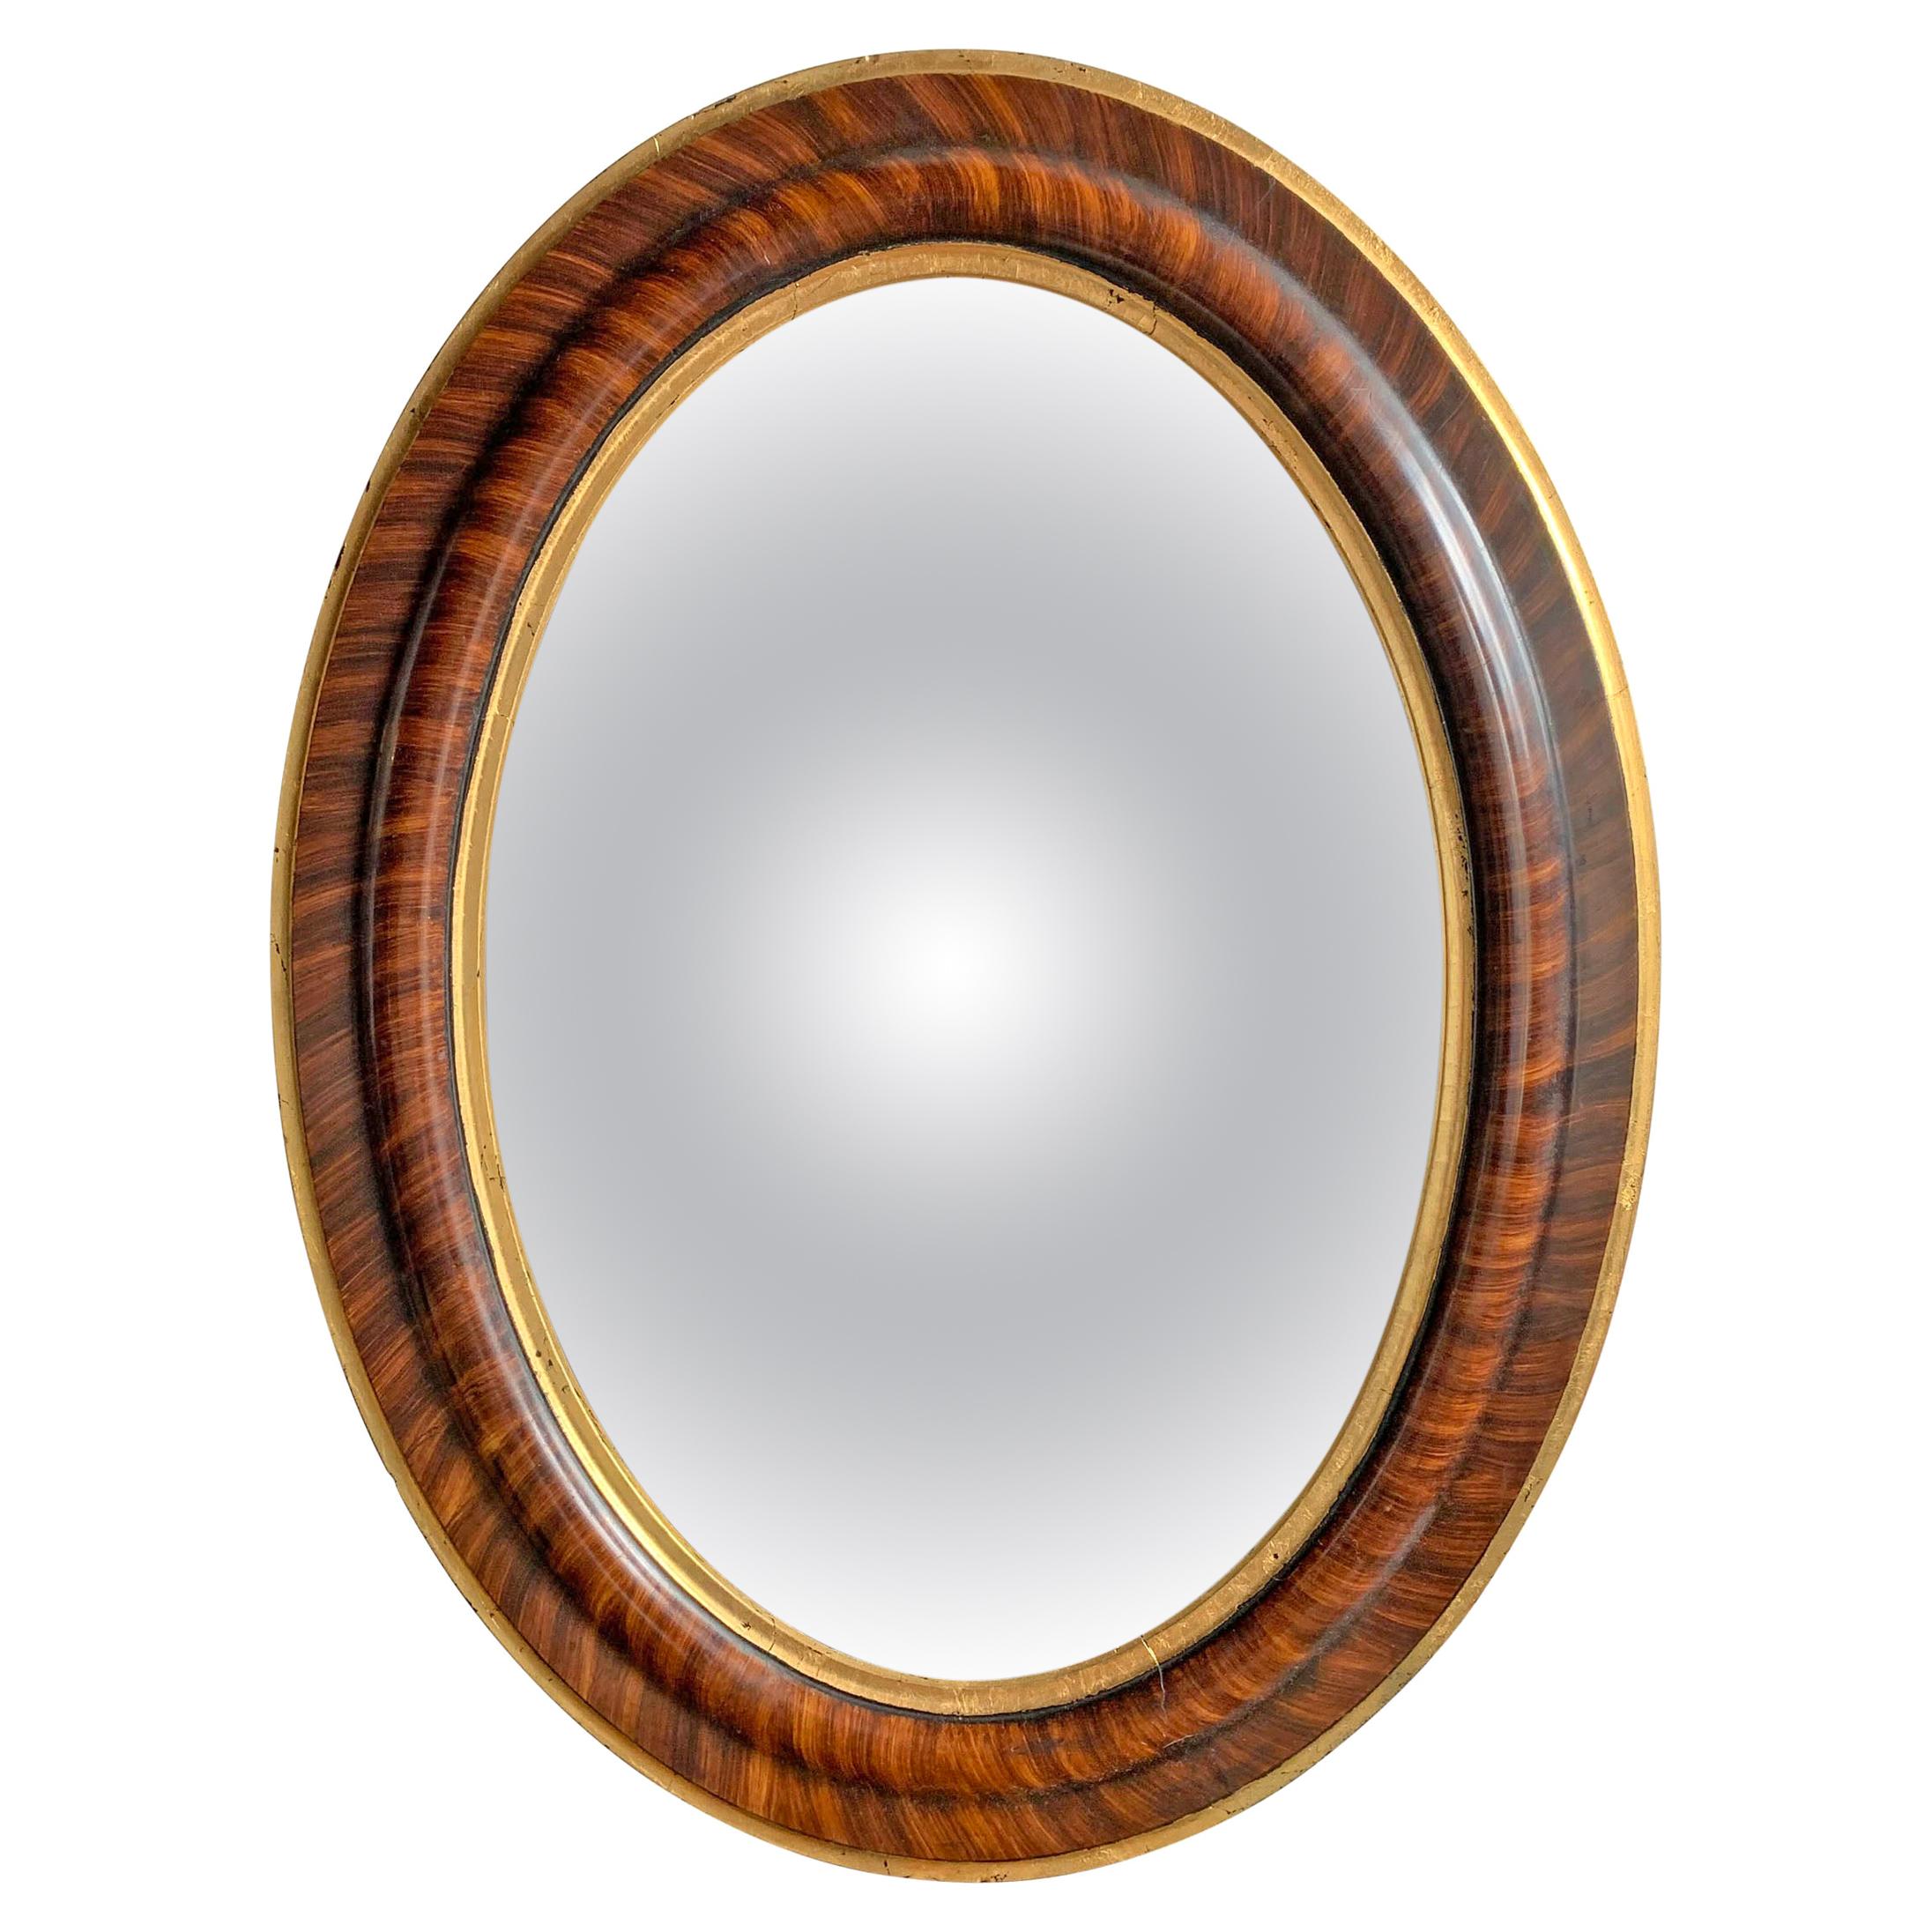 19th Century American Oval Convex Mirror